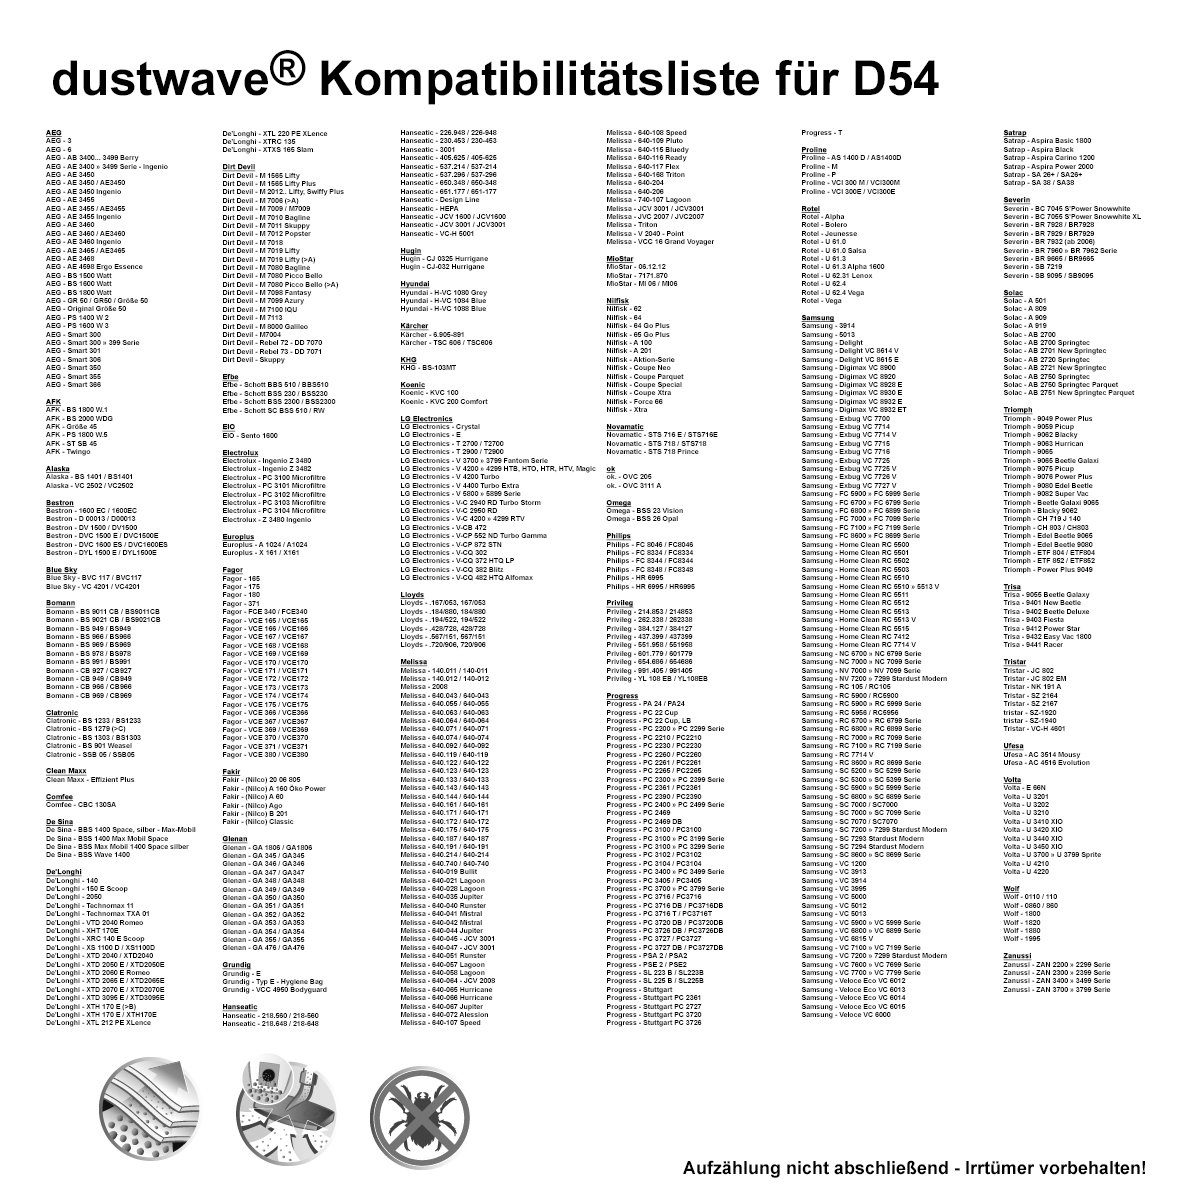 Dustwave Staubsaugerbeutel Test-Set, Staubsaugerbeutel für St., Test-Set, 15x15cm W31, Hepa-Filter 1 AmazonBasics - AmazonBasics passend W31 Standard (ca. - zuschneidbar) 1 + 1